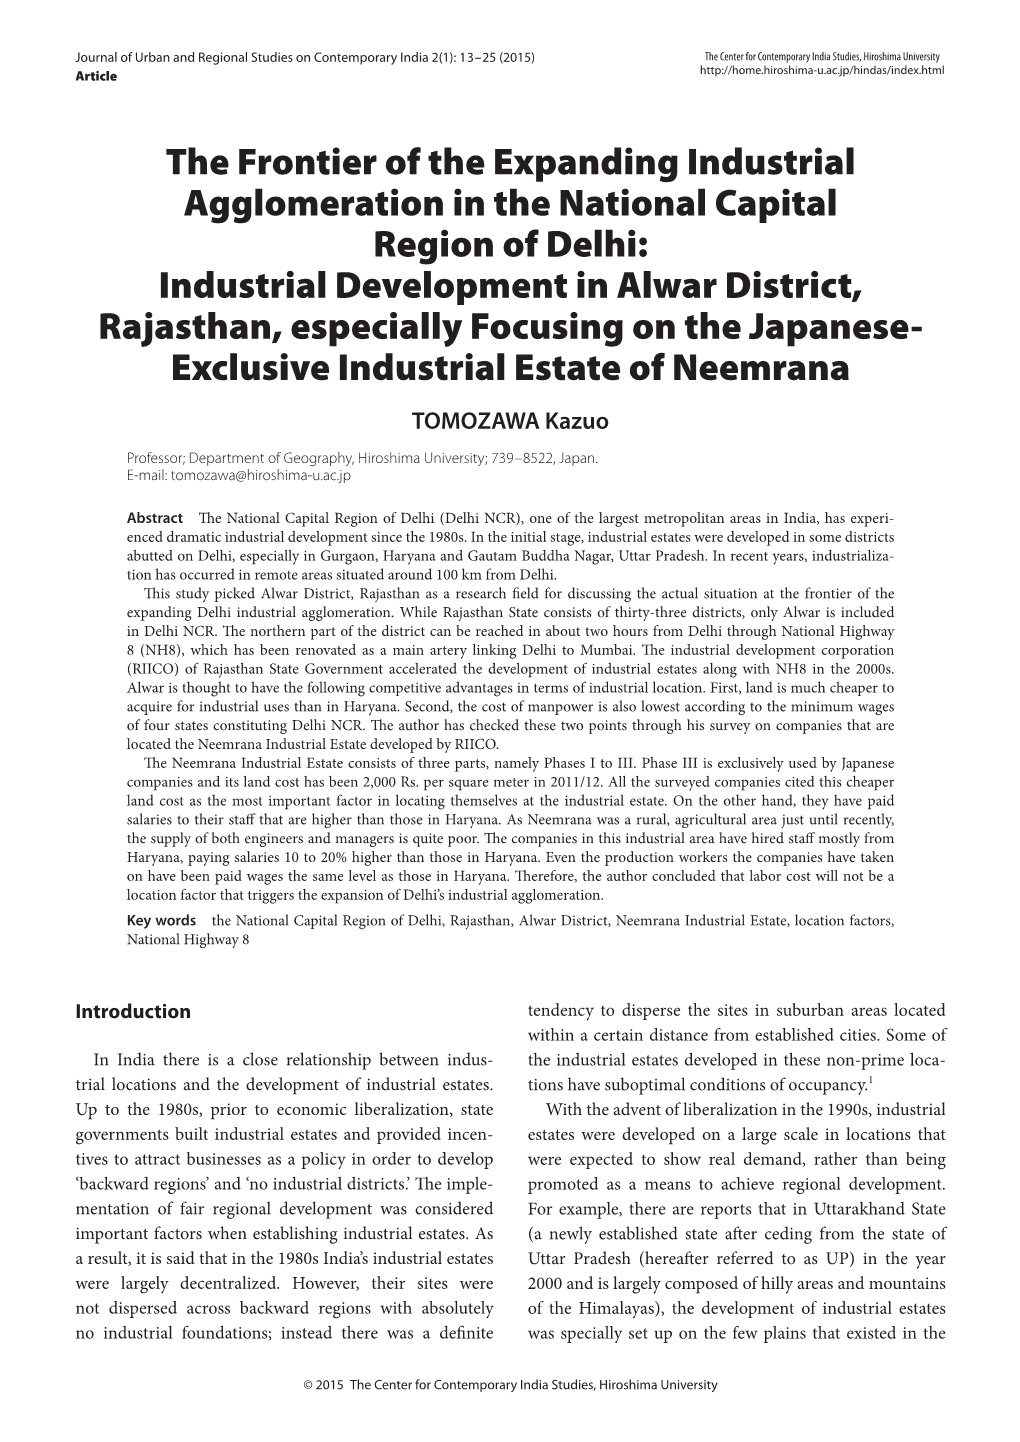 Industrial Development in Alwar District, Rajasthan, Especially Focusing on the Japanese- Exclusive Industrial Estate of Neemrana TOMOZAWA Kazuo